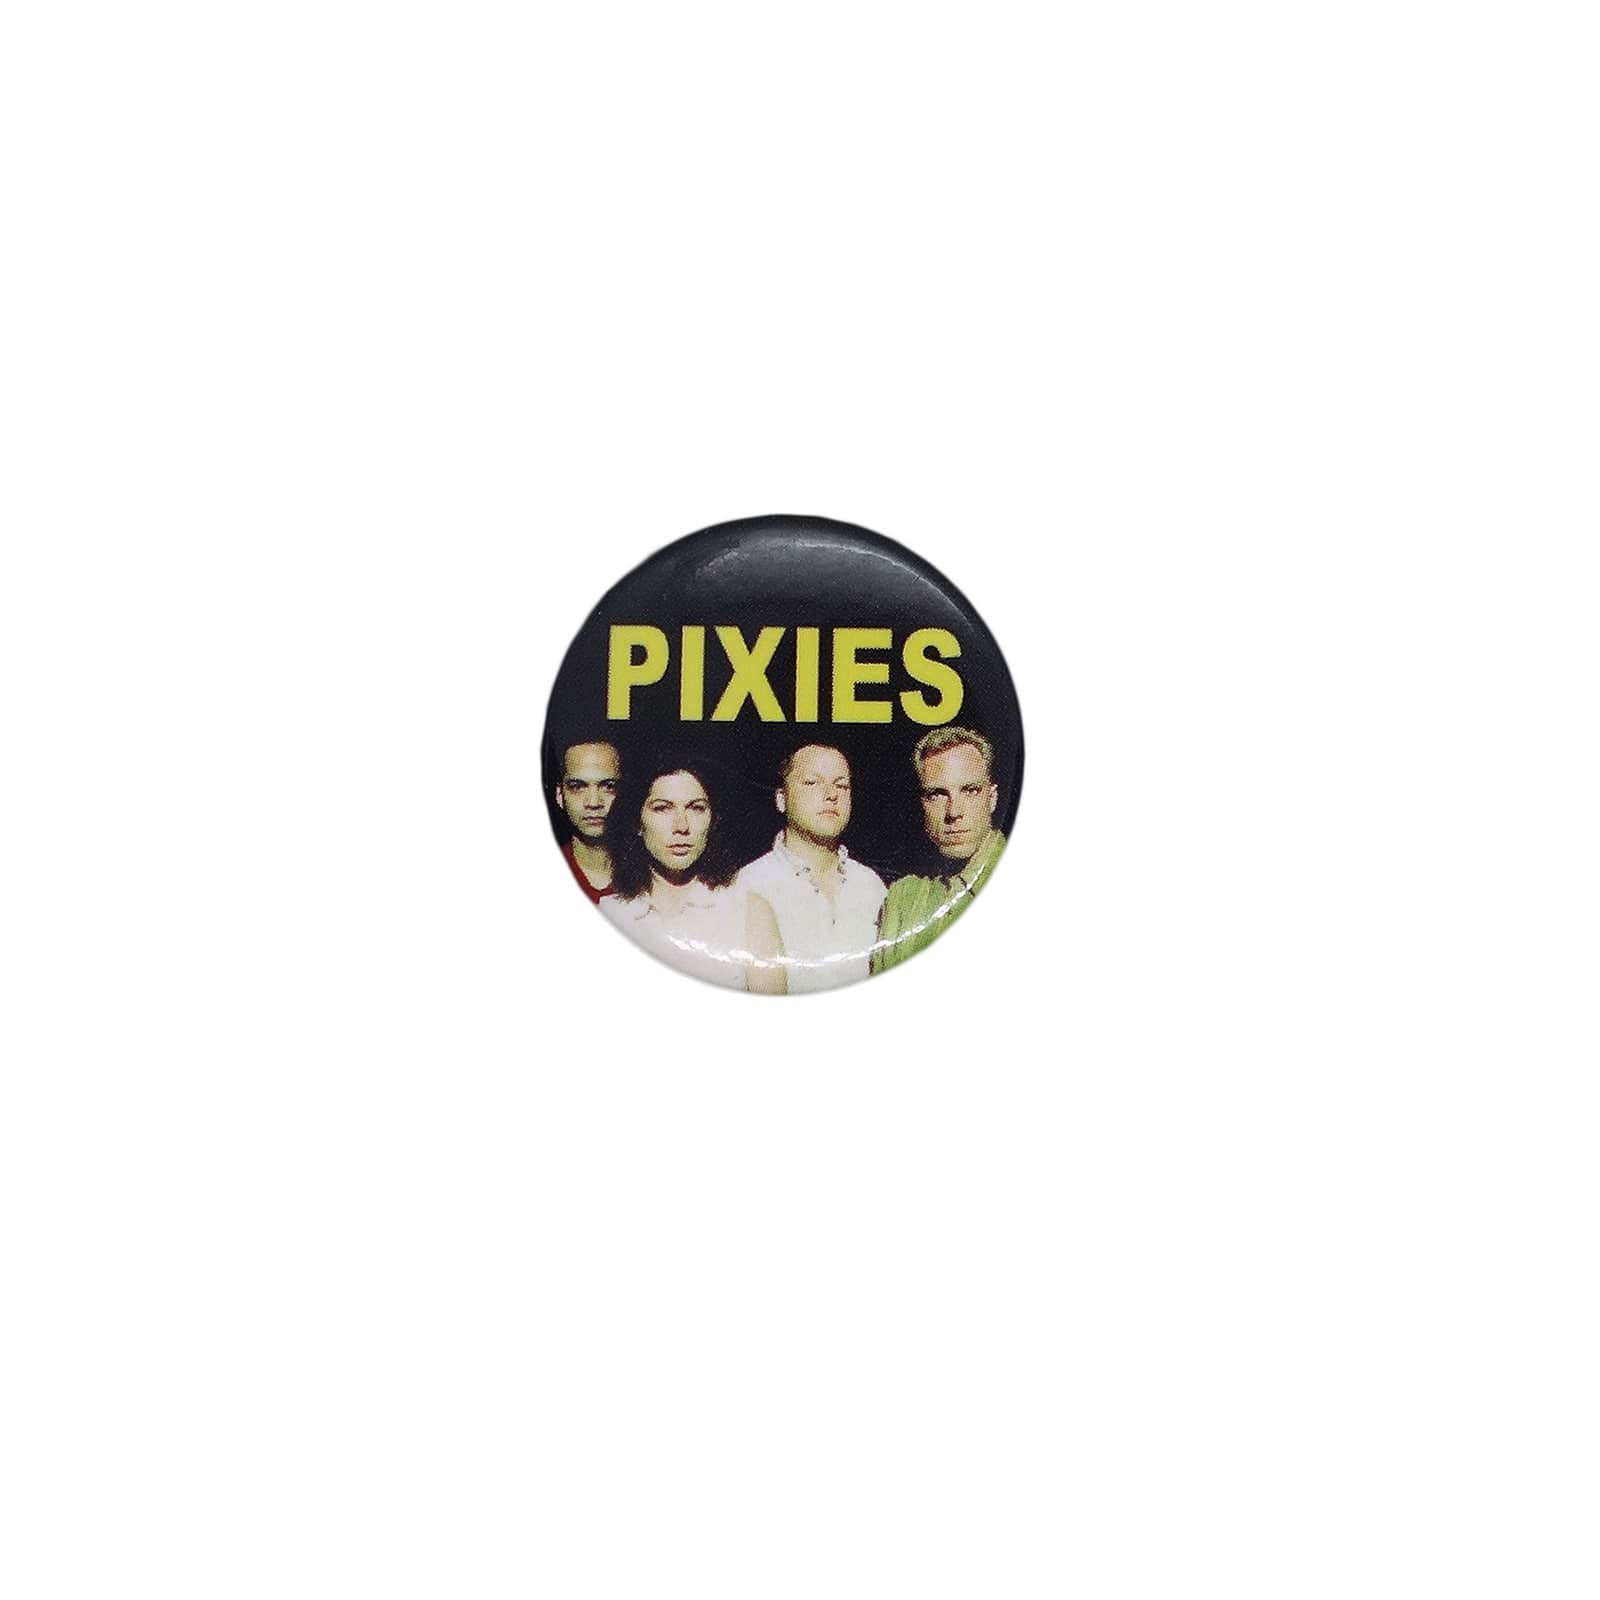 PIXIES ピクシーズ 缶バッジ バッチ ロックバンド